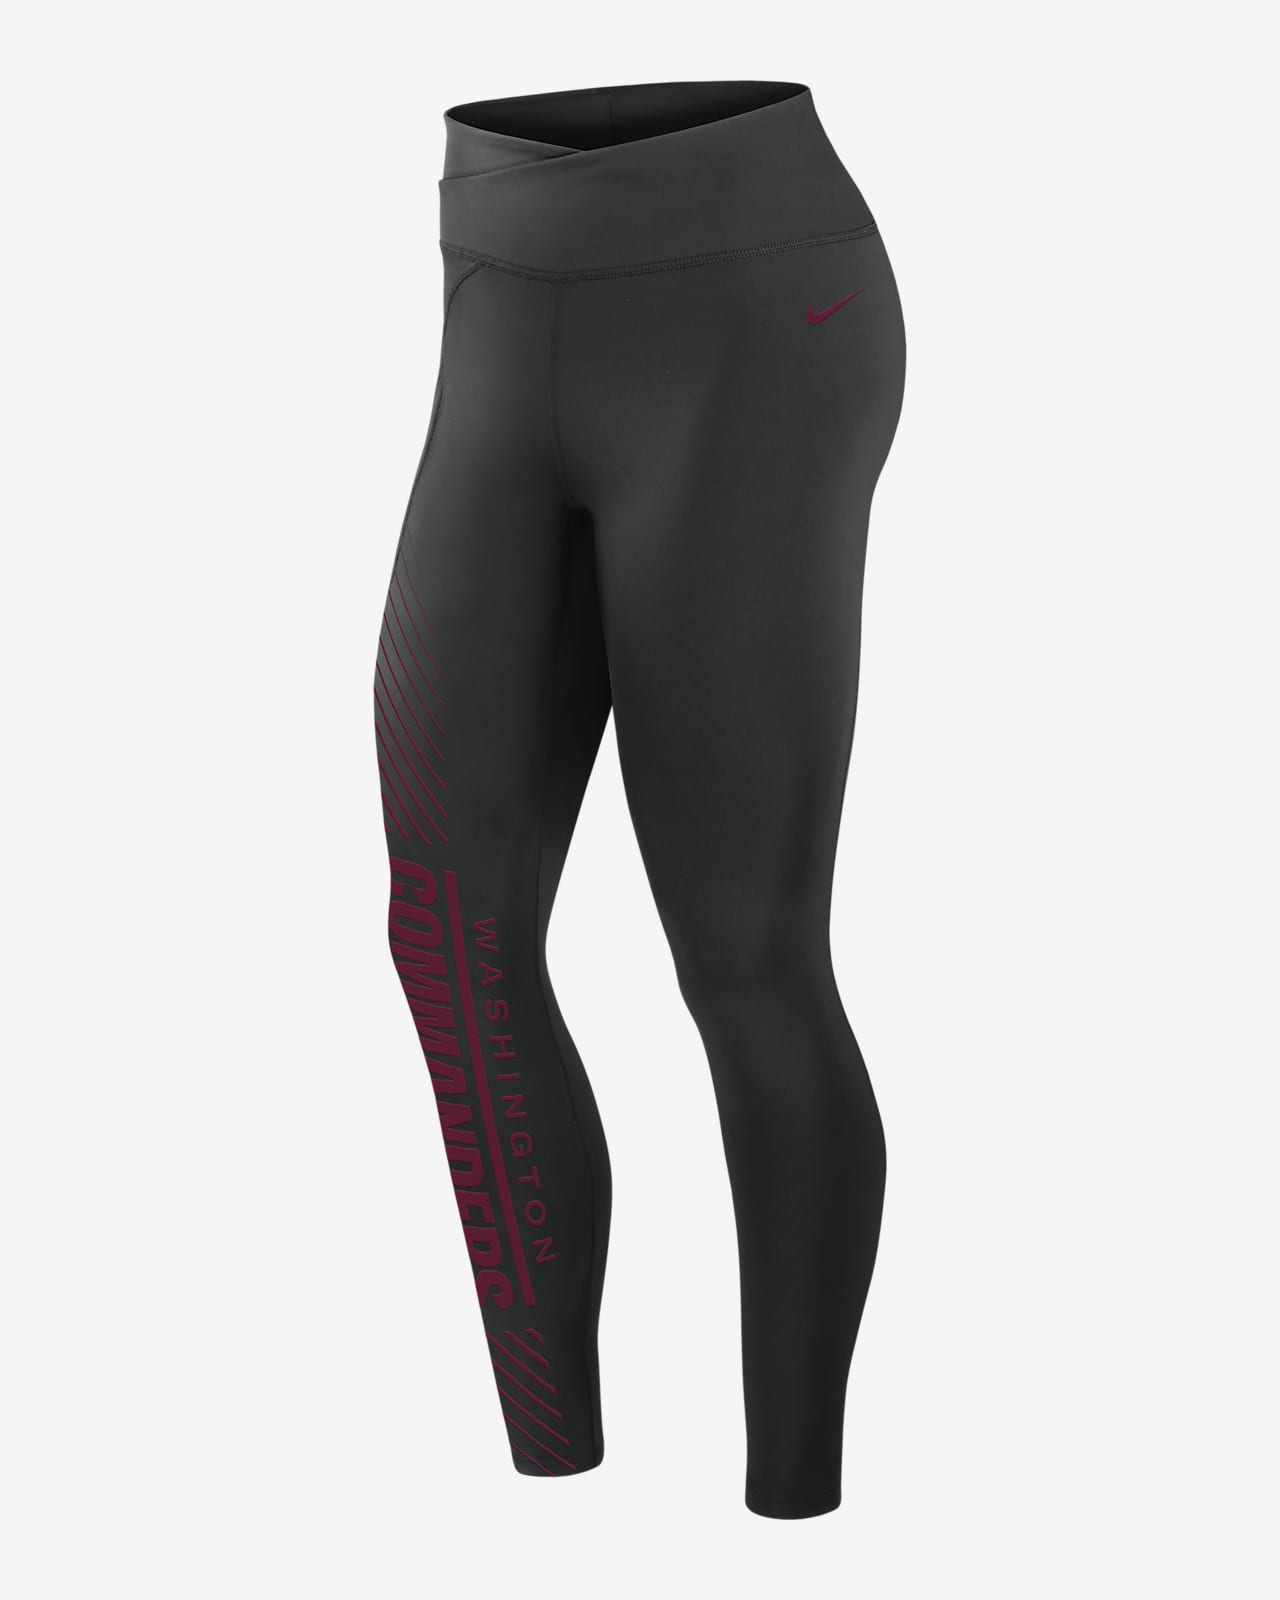 NEW Nike Thermal Dri-Fit Compression Tights Pants - 748868-100 - White -  Medium | eBay